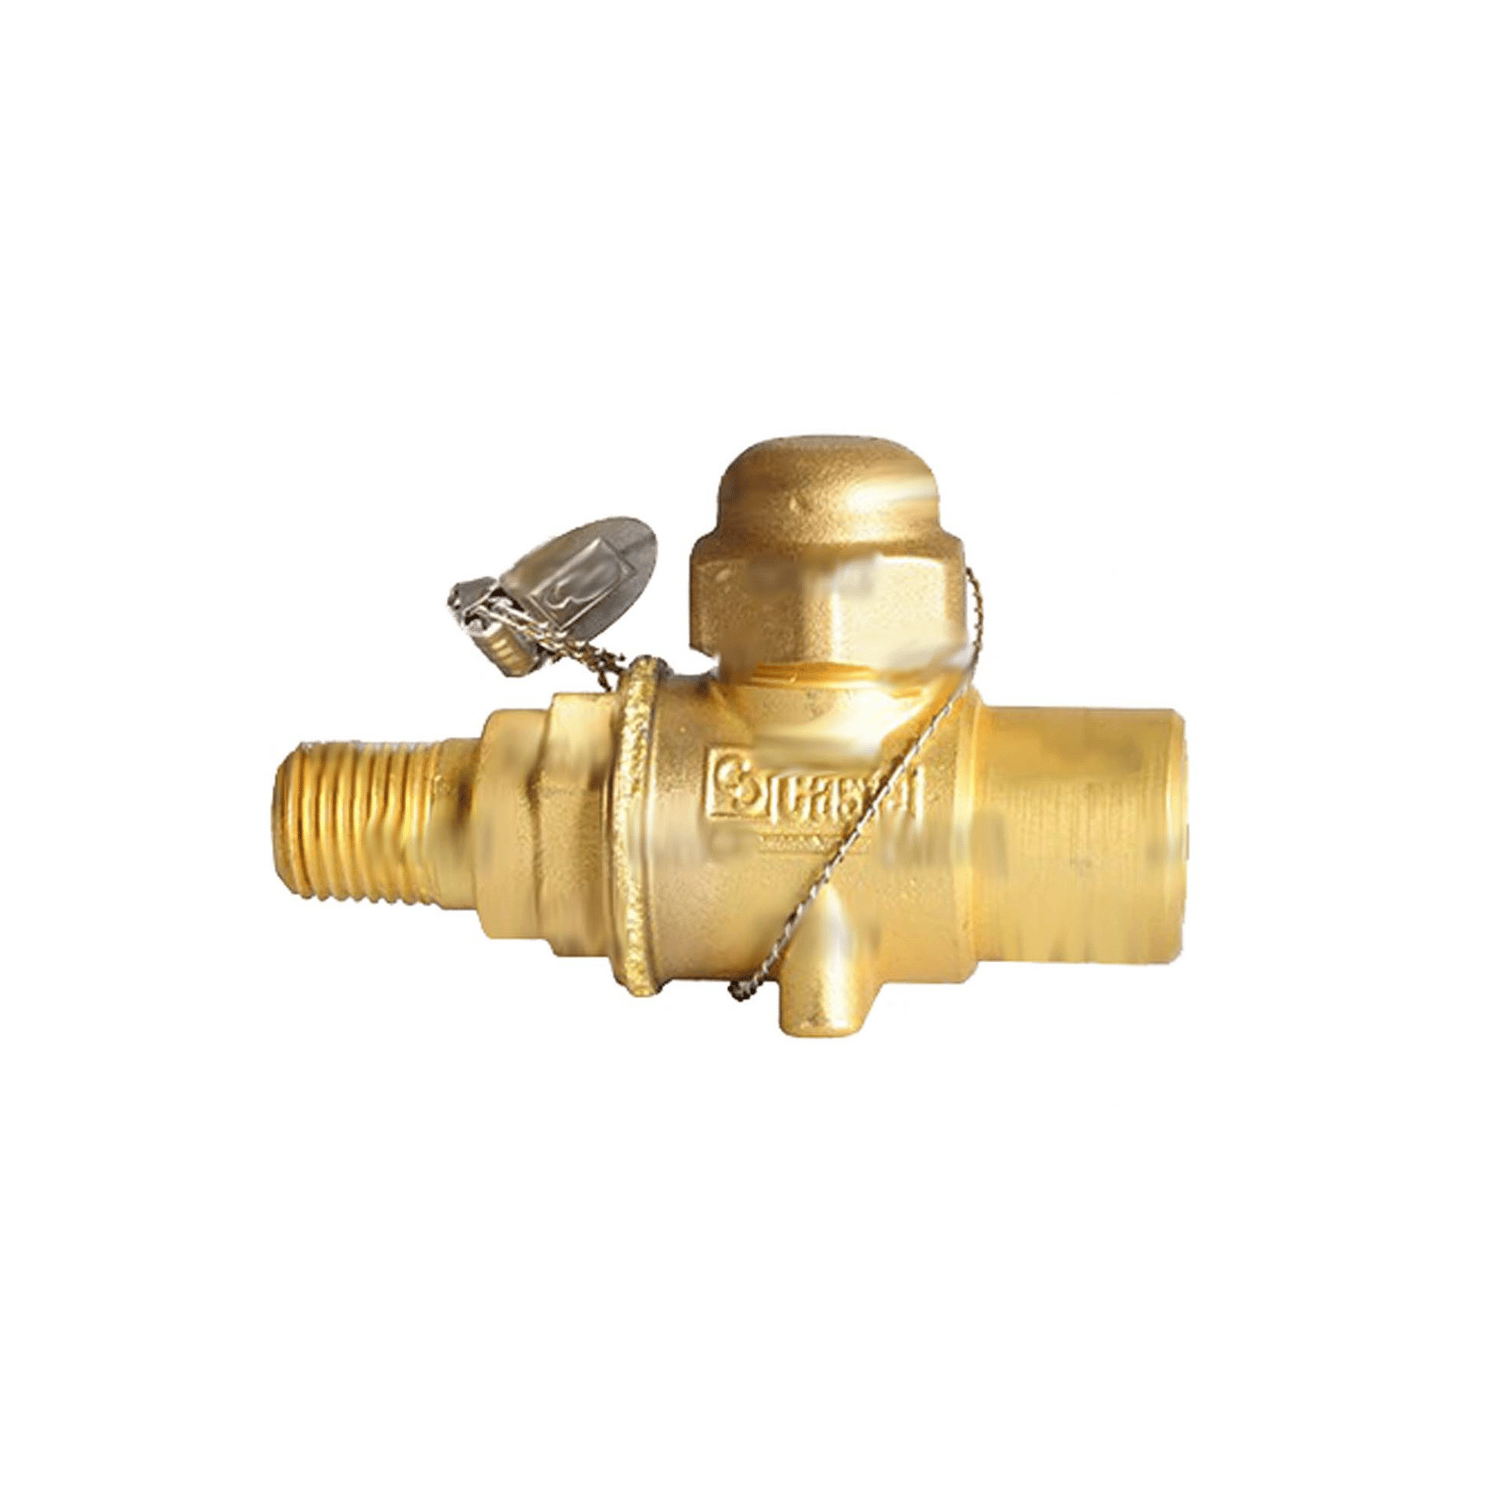 Ball valve Castel 3064/22, connection 1/4 "NPT, kv = 2.5 m3 / h